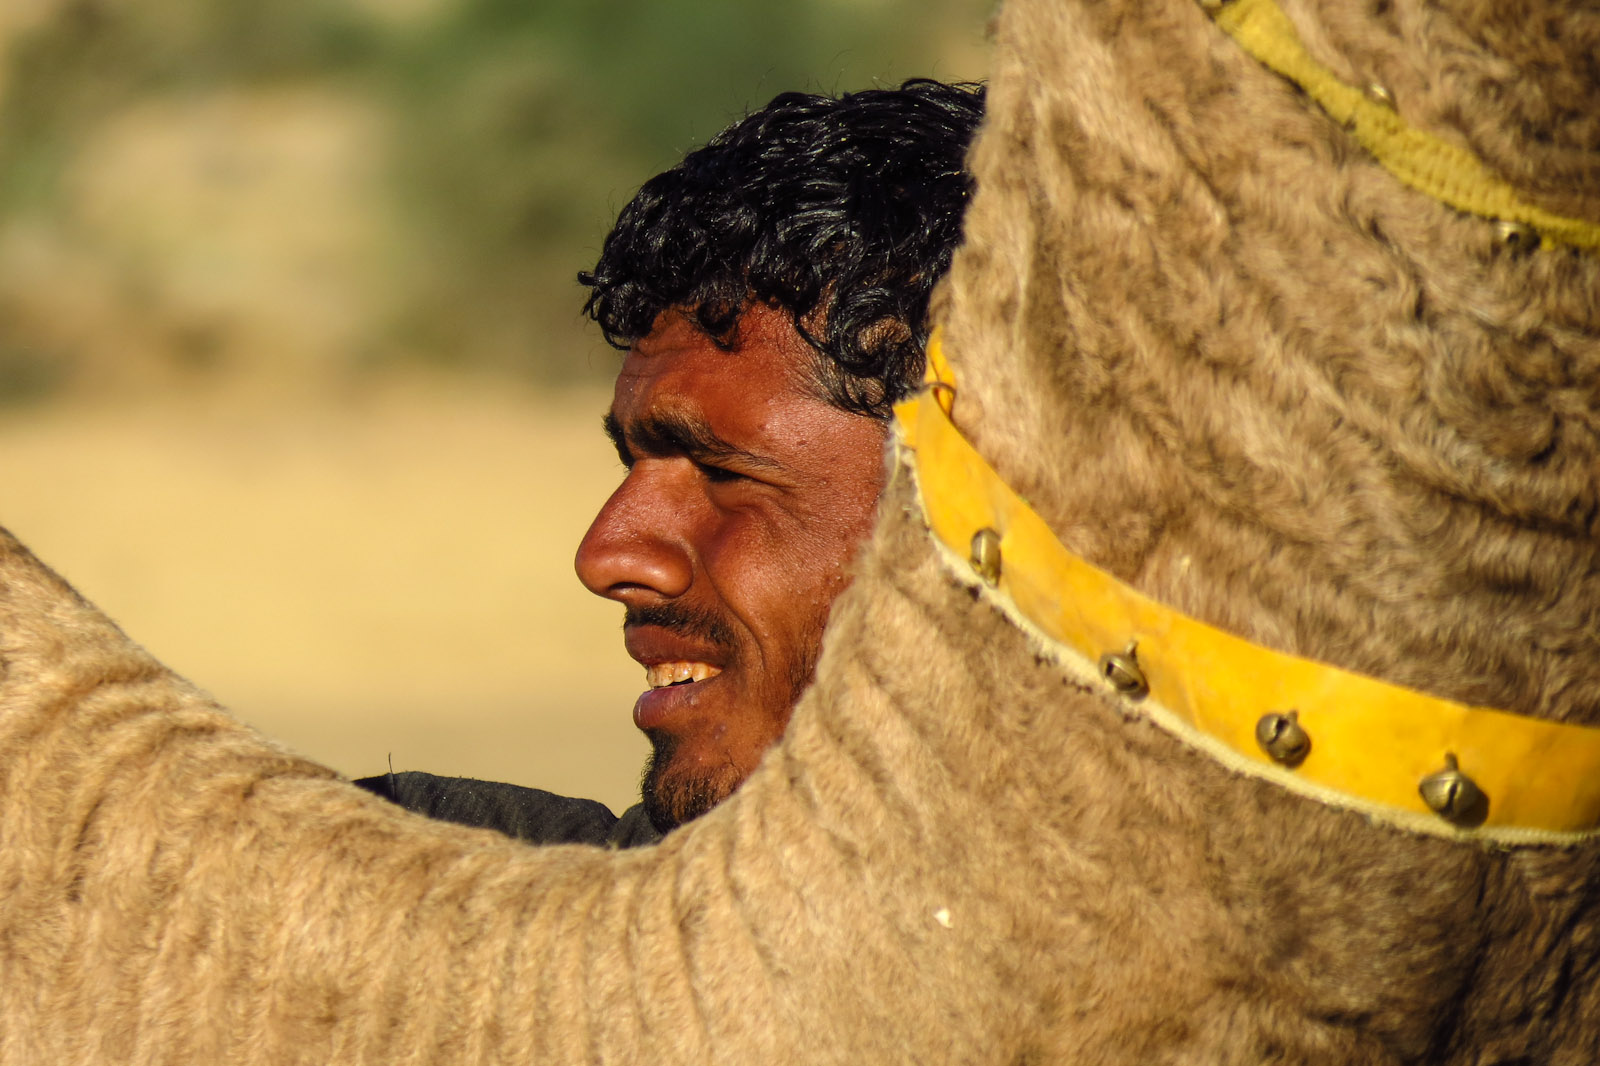 camel-driver-and-camel-neck-jaisalmer